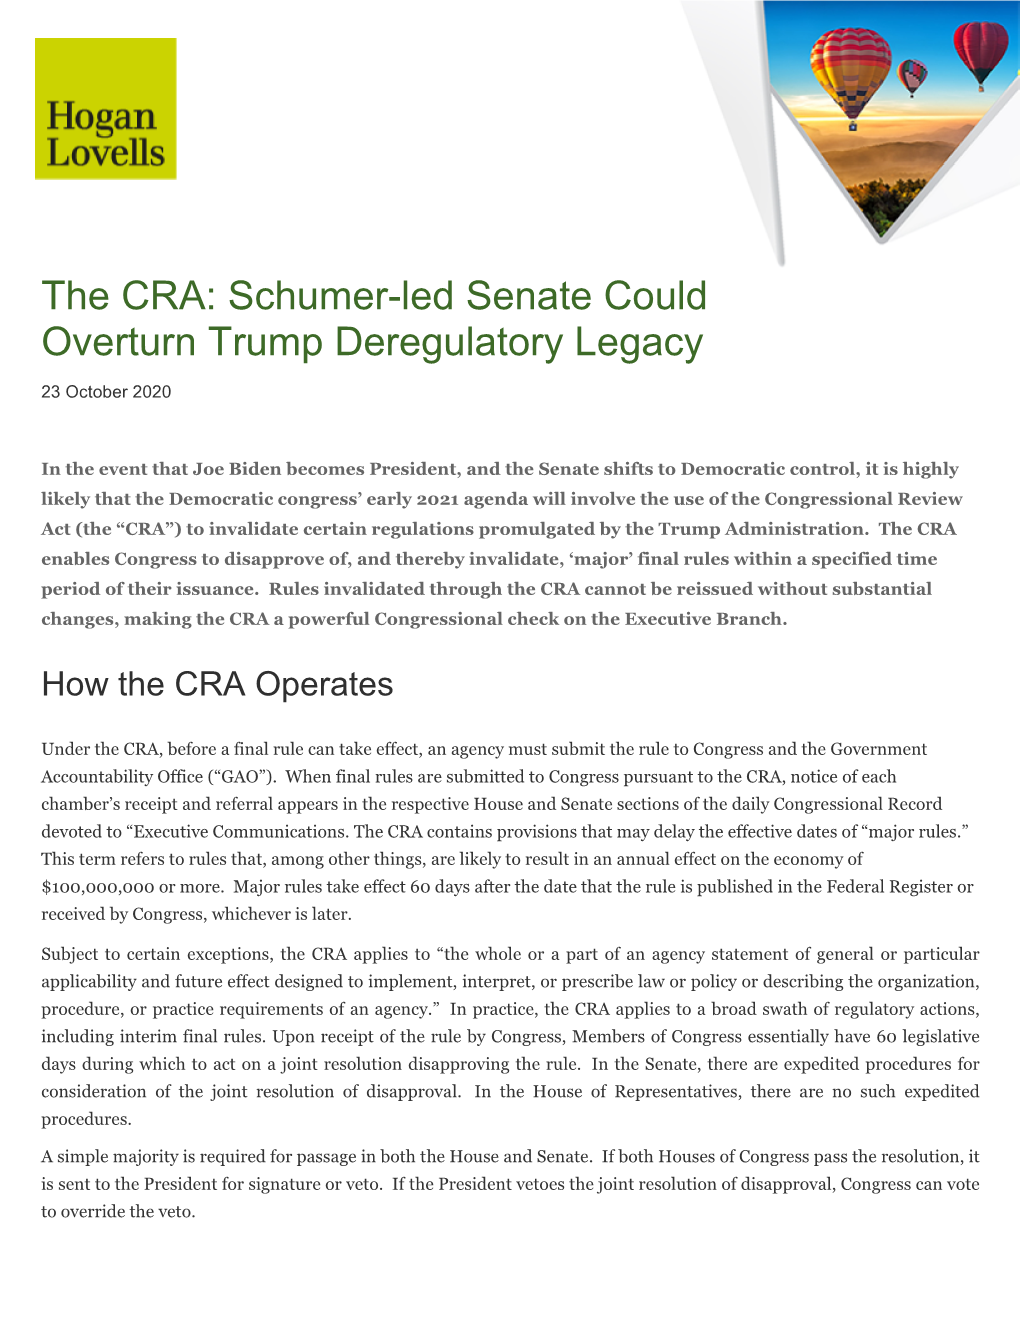 The CRA: Schumer-Led Senate Could Overturn Trump Deregulatory Legacy